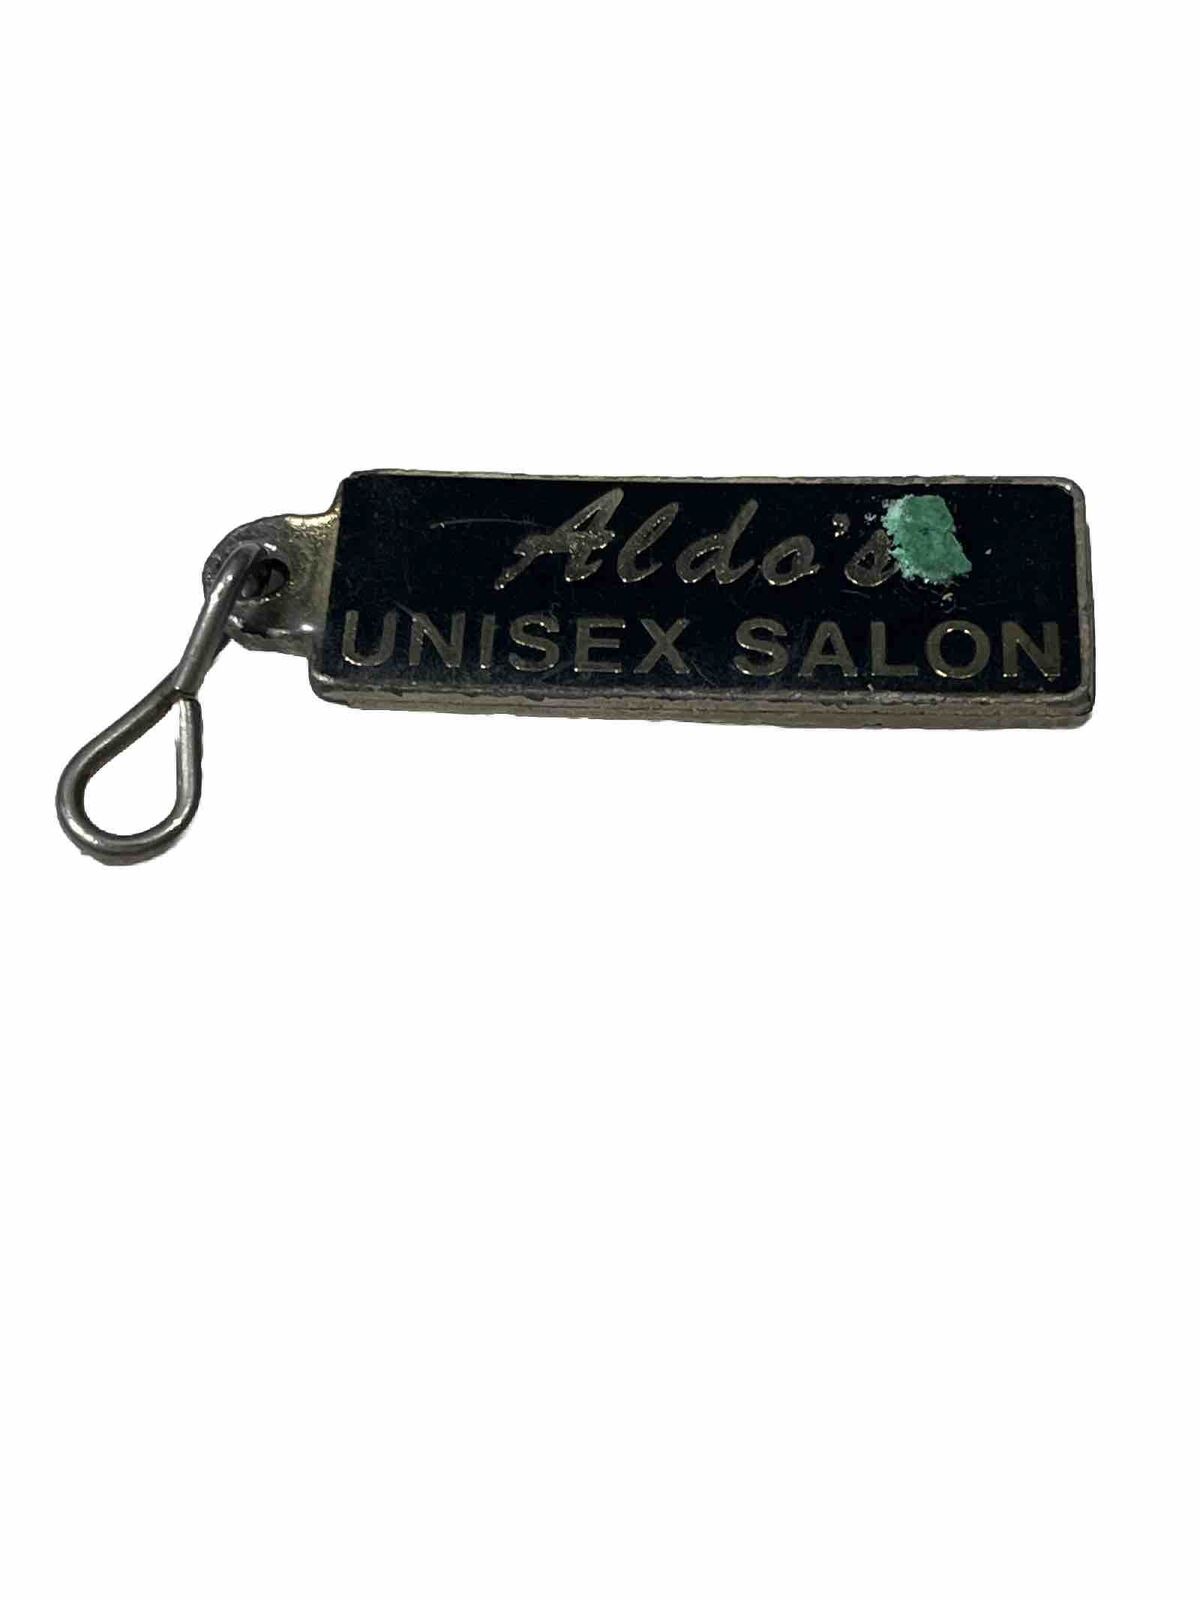 Vintage Retro Men’s Barber Key Ring Australia Aldo Unisex Hair Salon